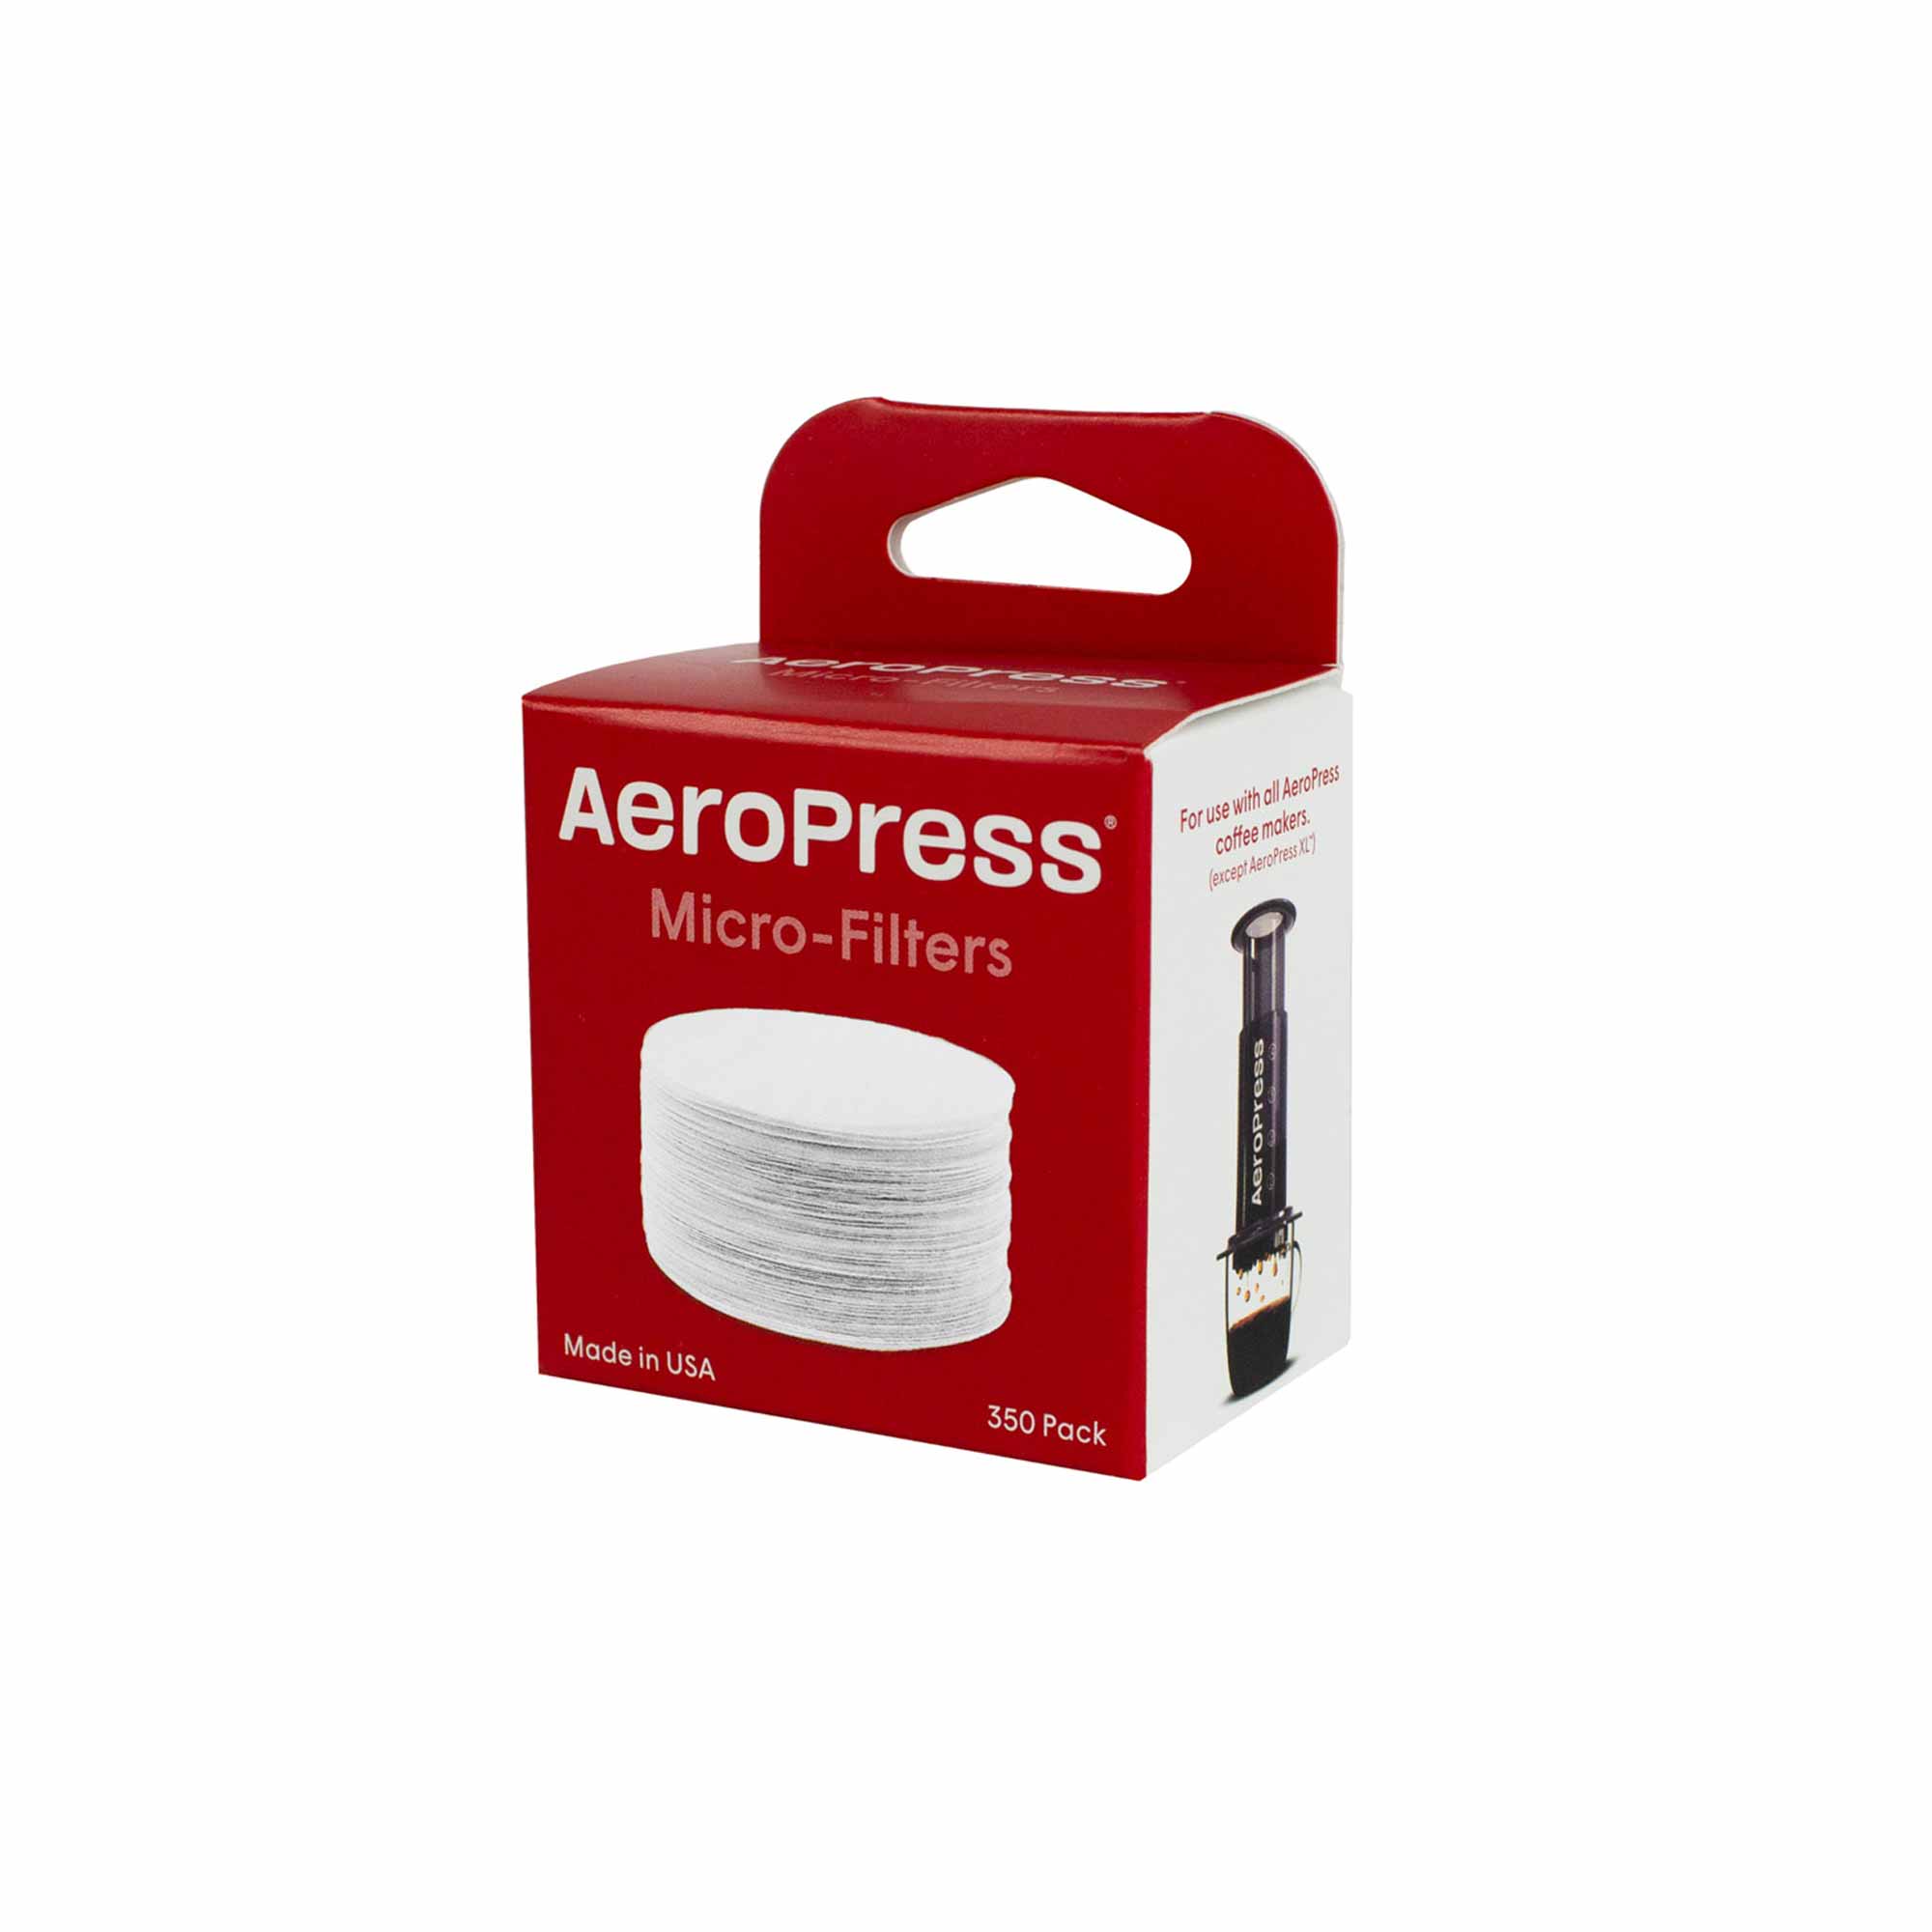 AeroPress® Micro-Filters